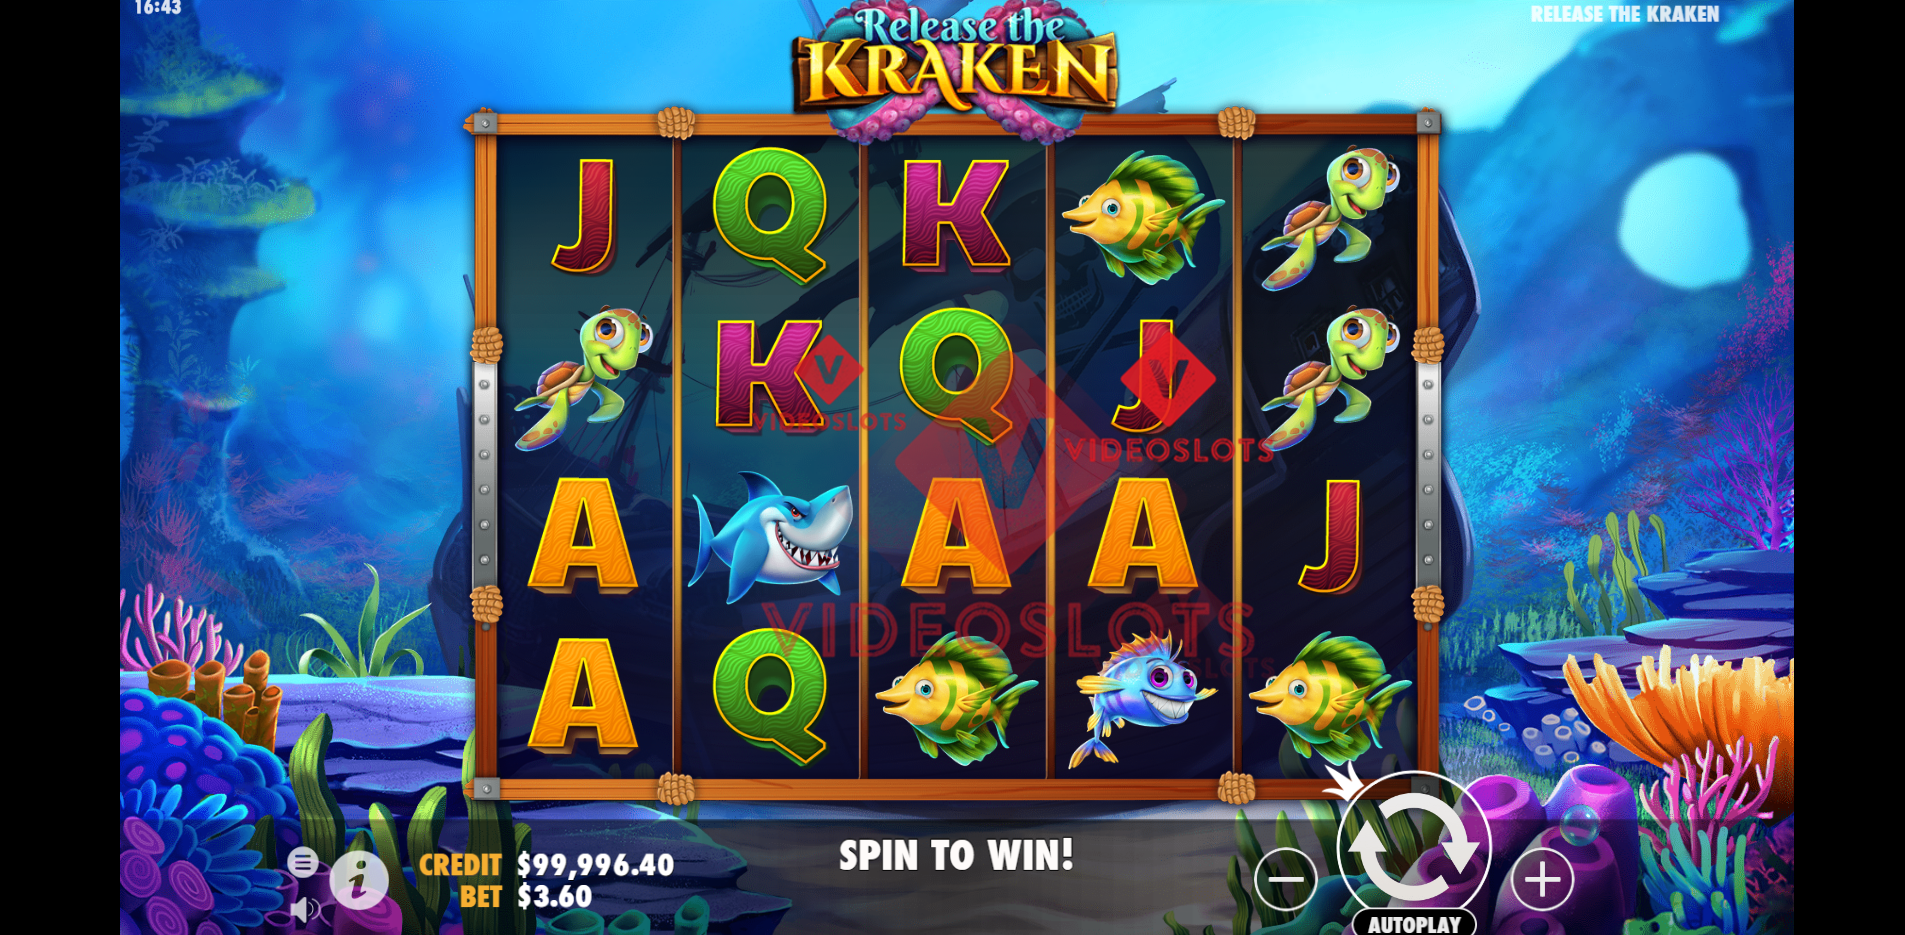 Base Game for Release The Kraken slot by Pragmatic Play